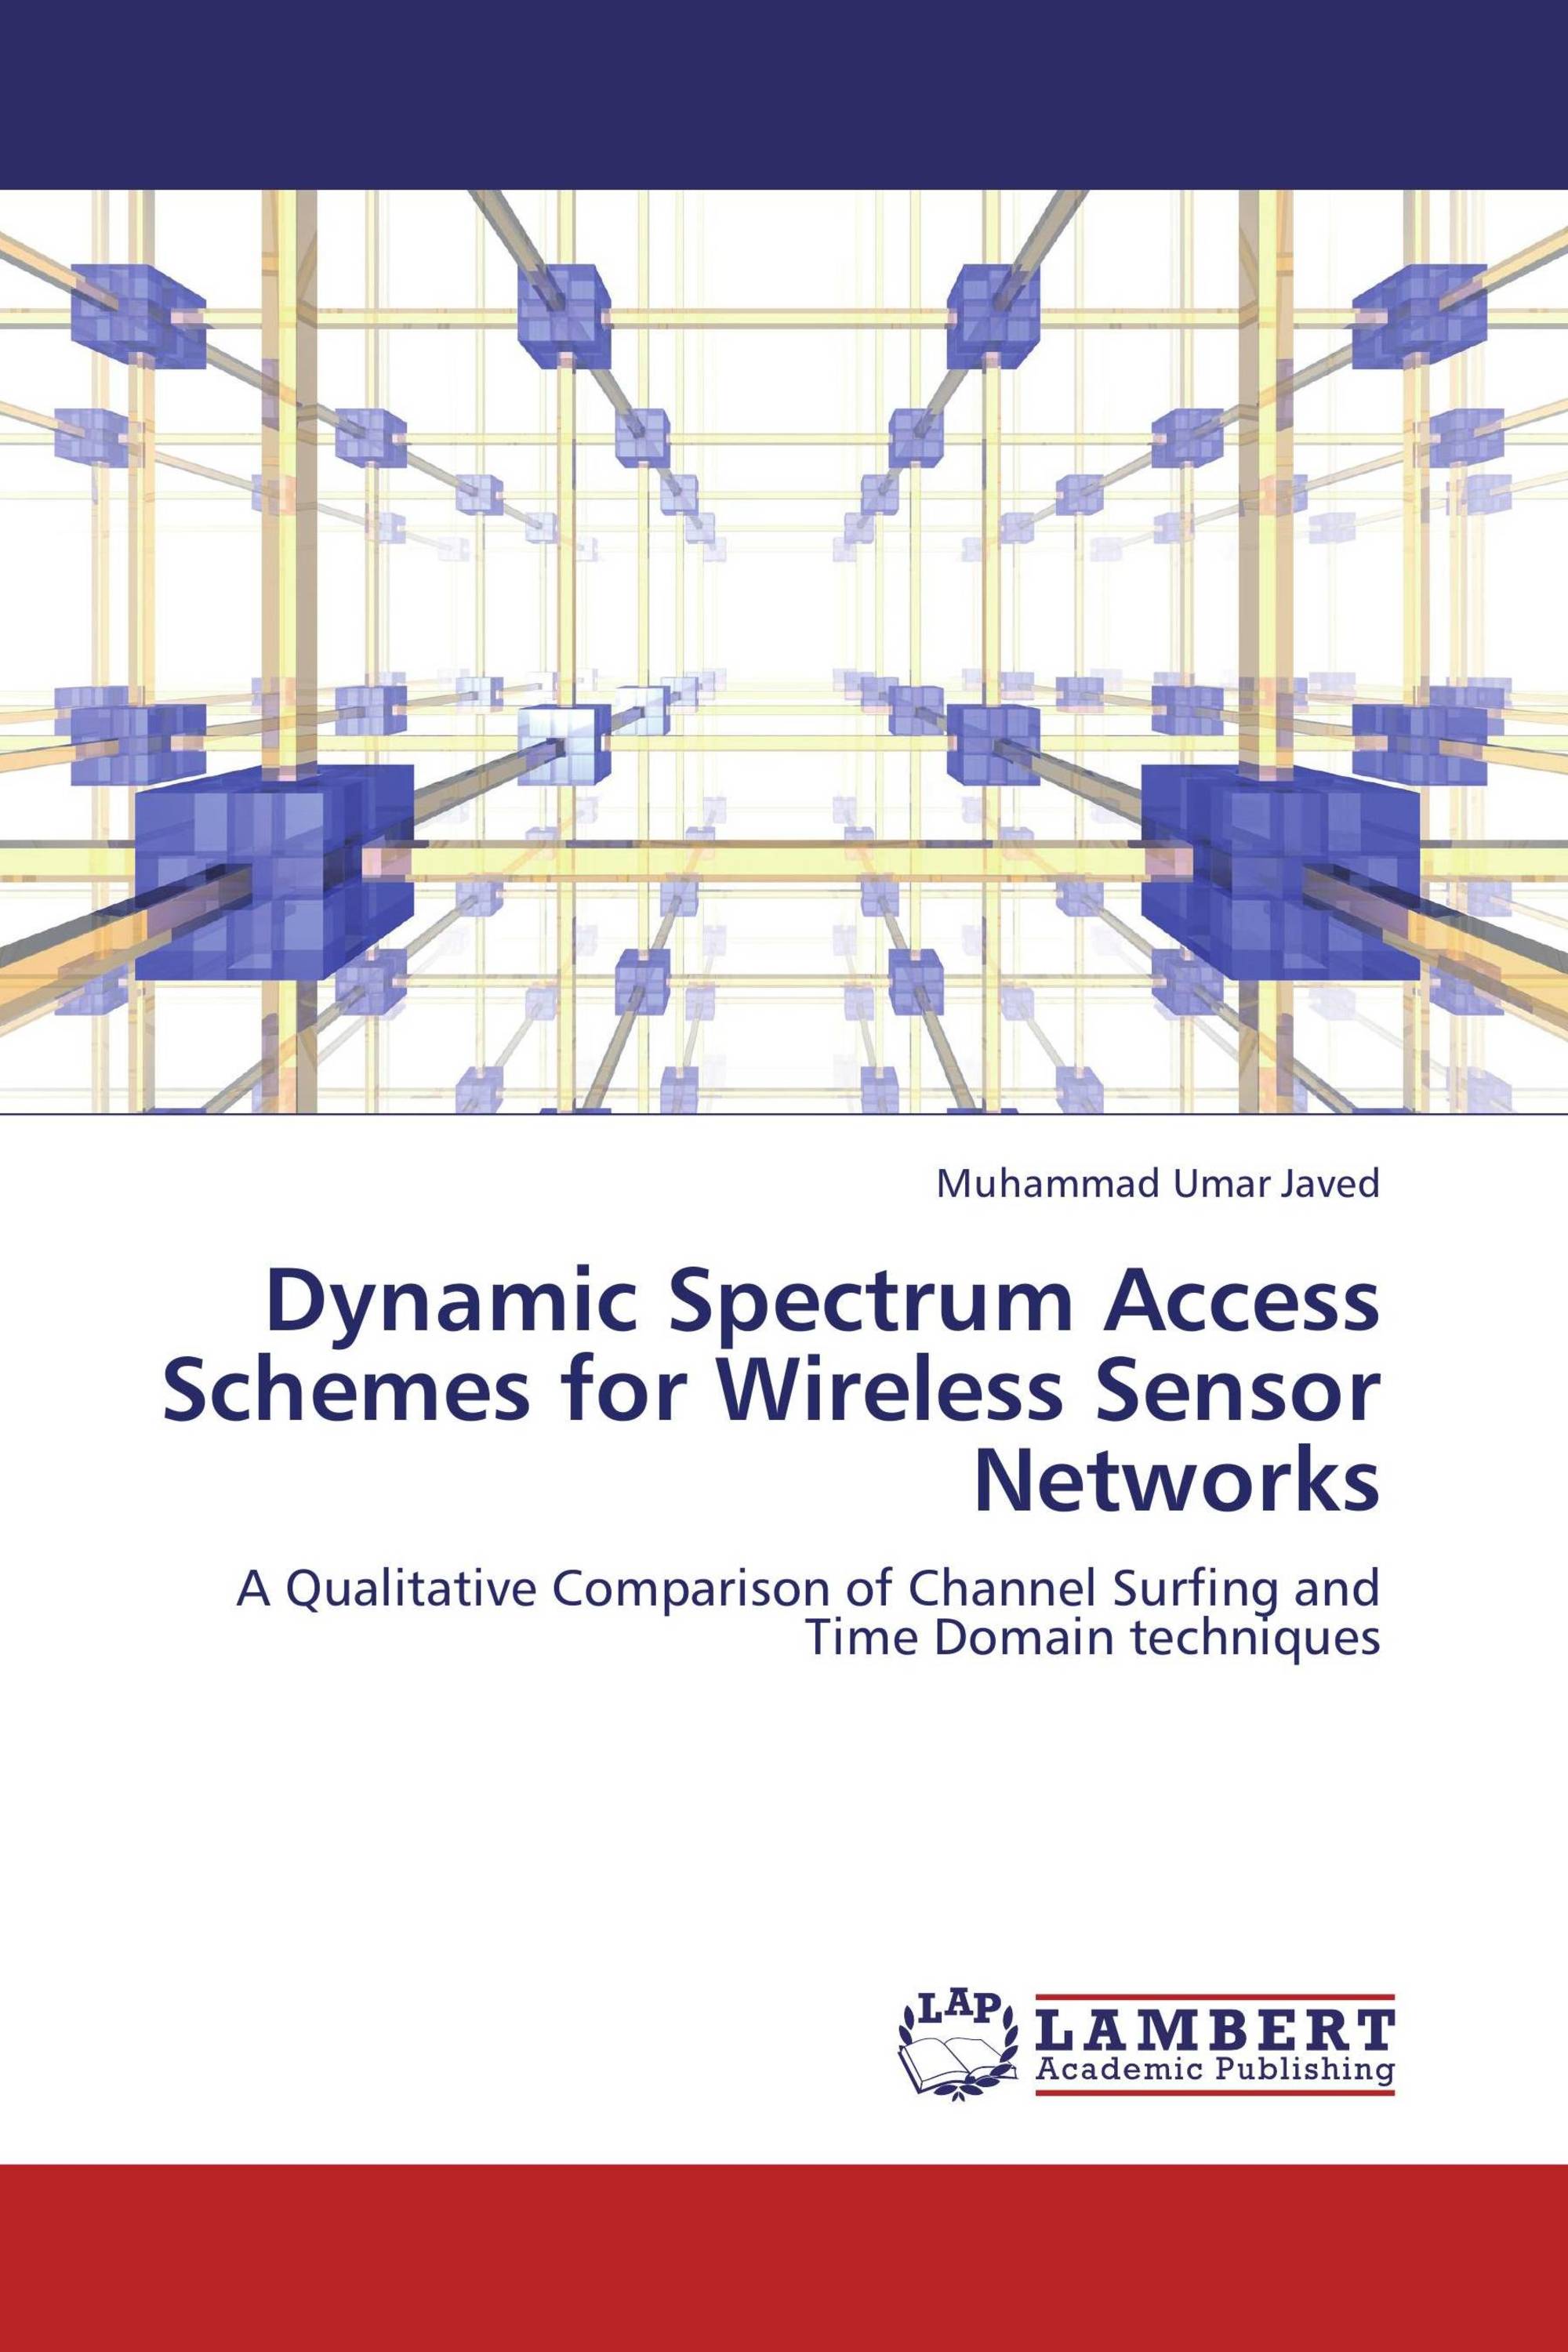 thesis sensor networks pdf